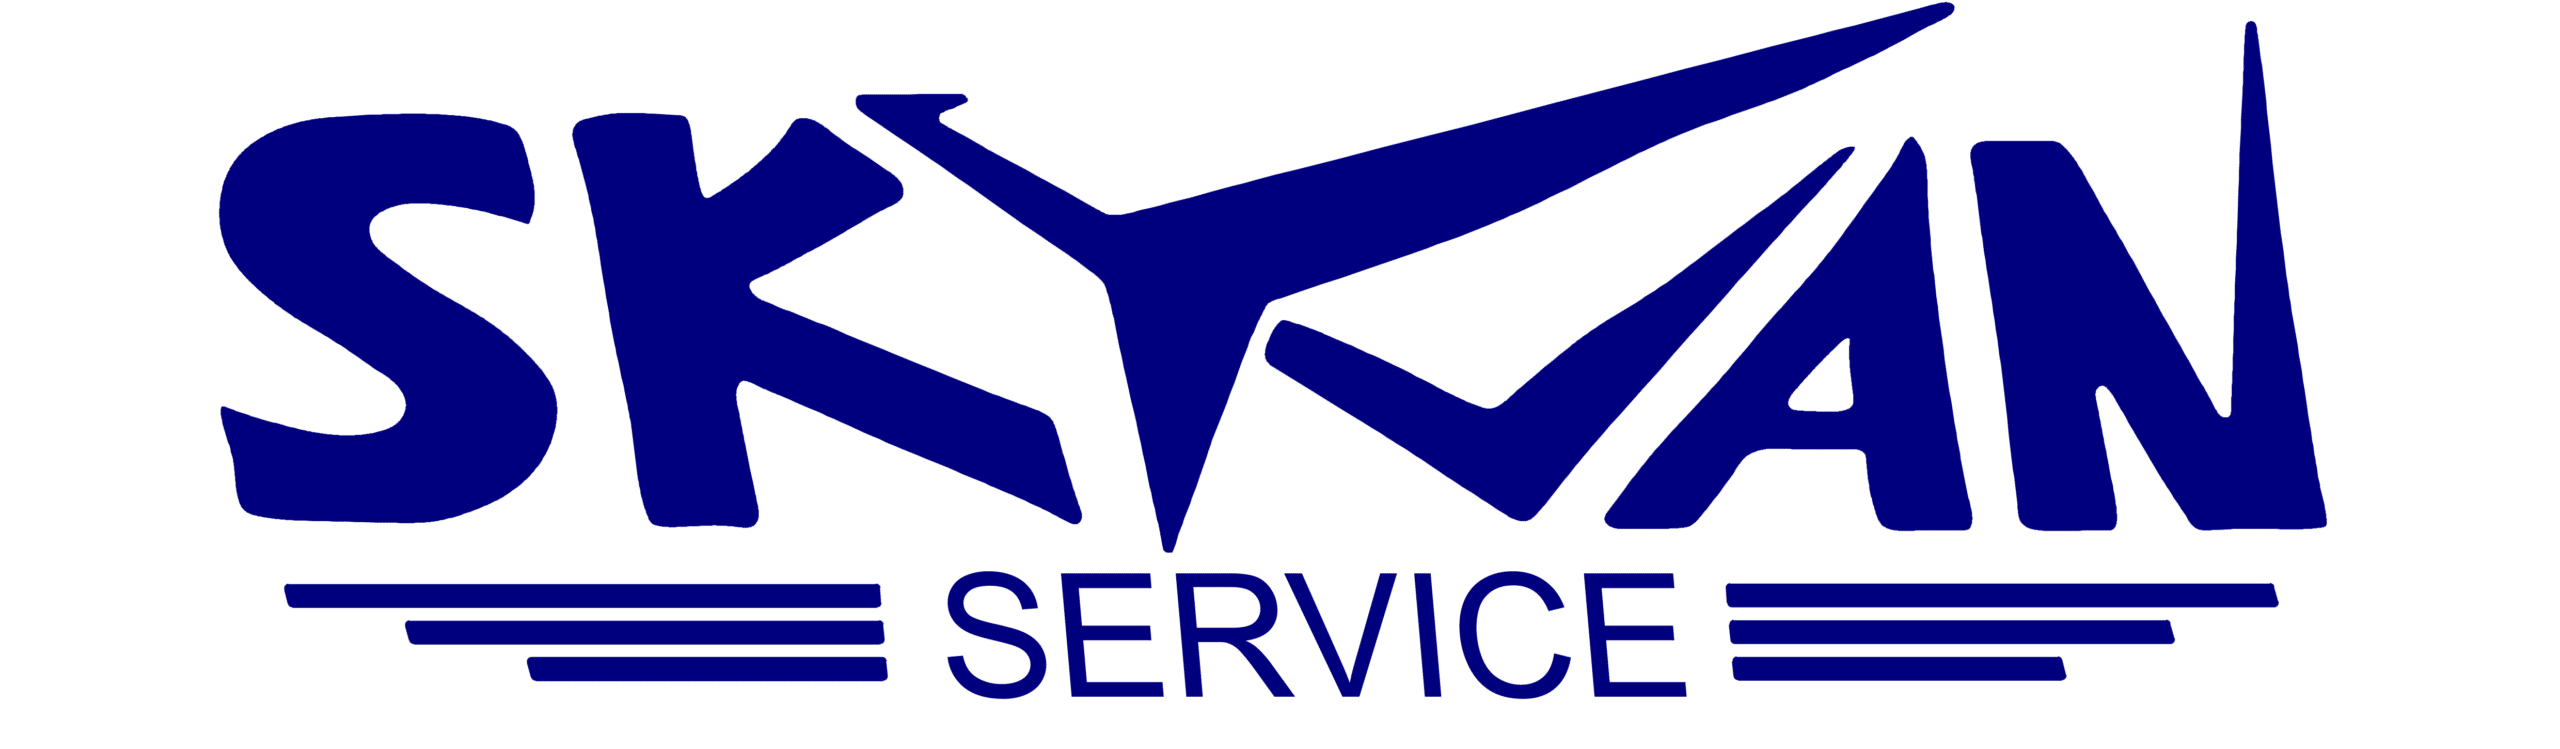 Skyvan Service